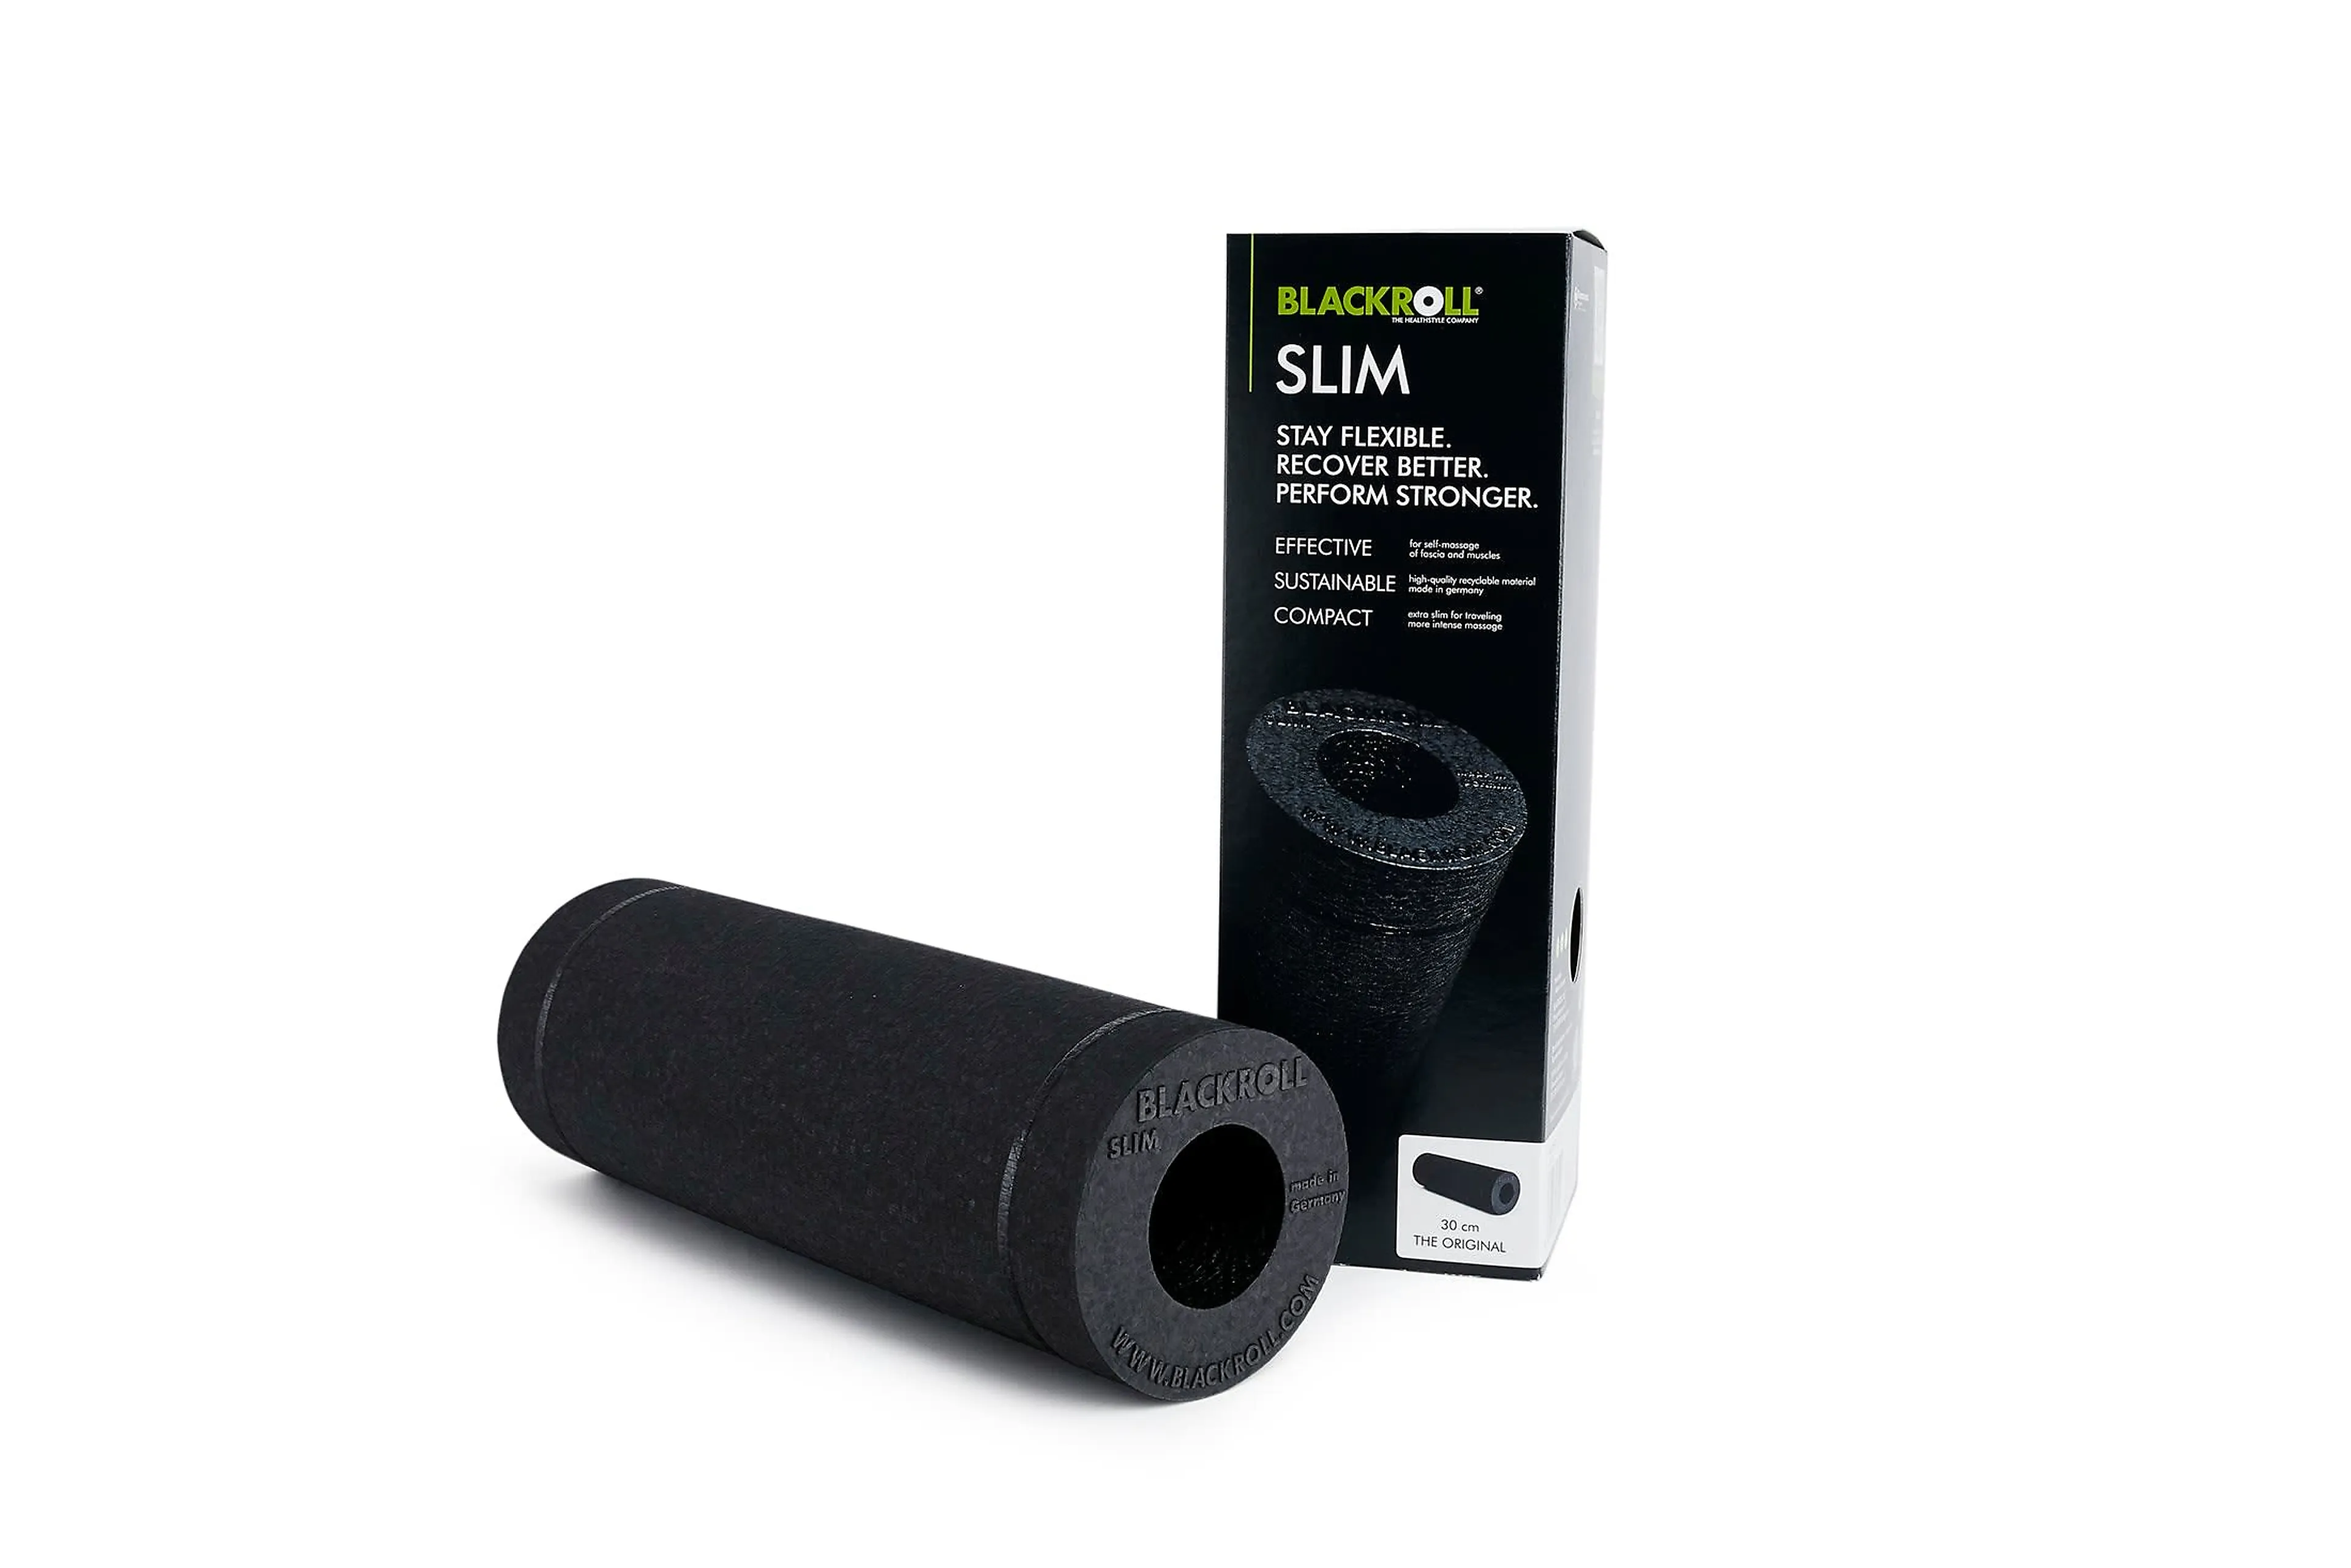 SLIM foam roller